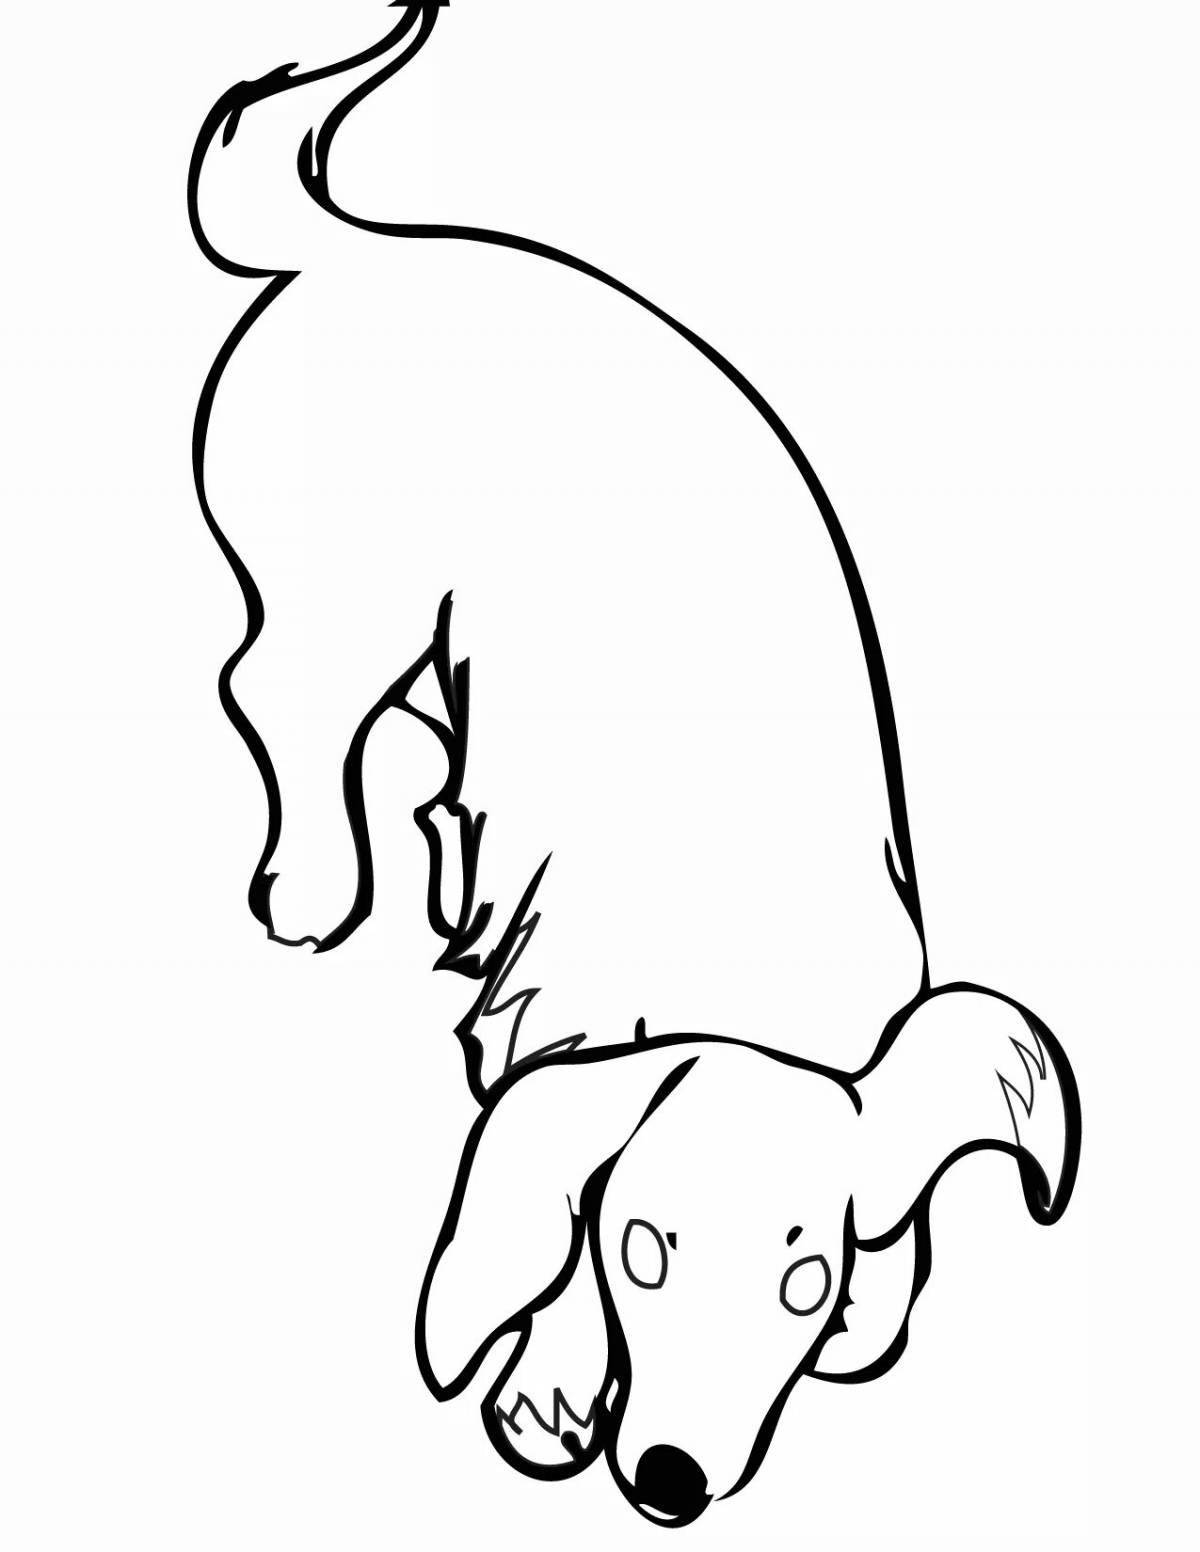 Odd dachshund coloring